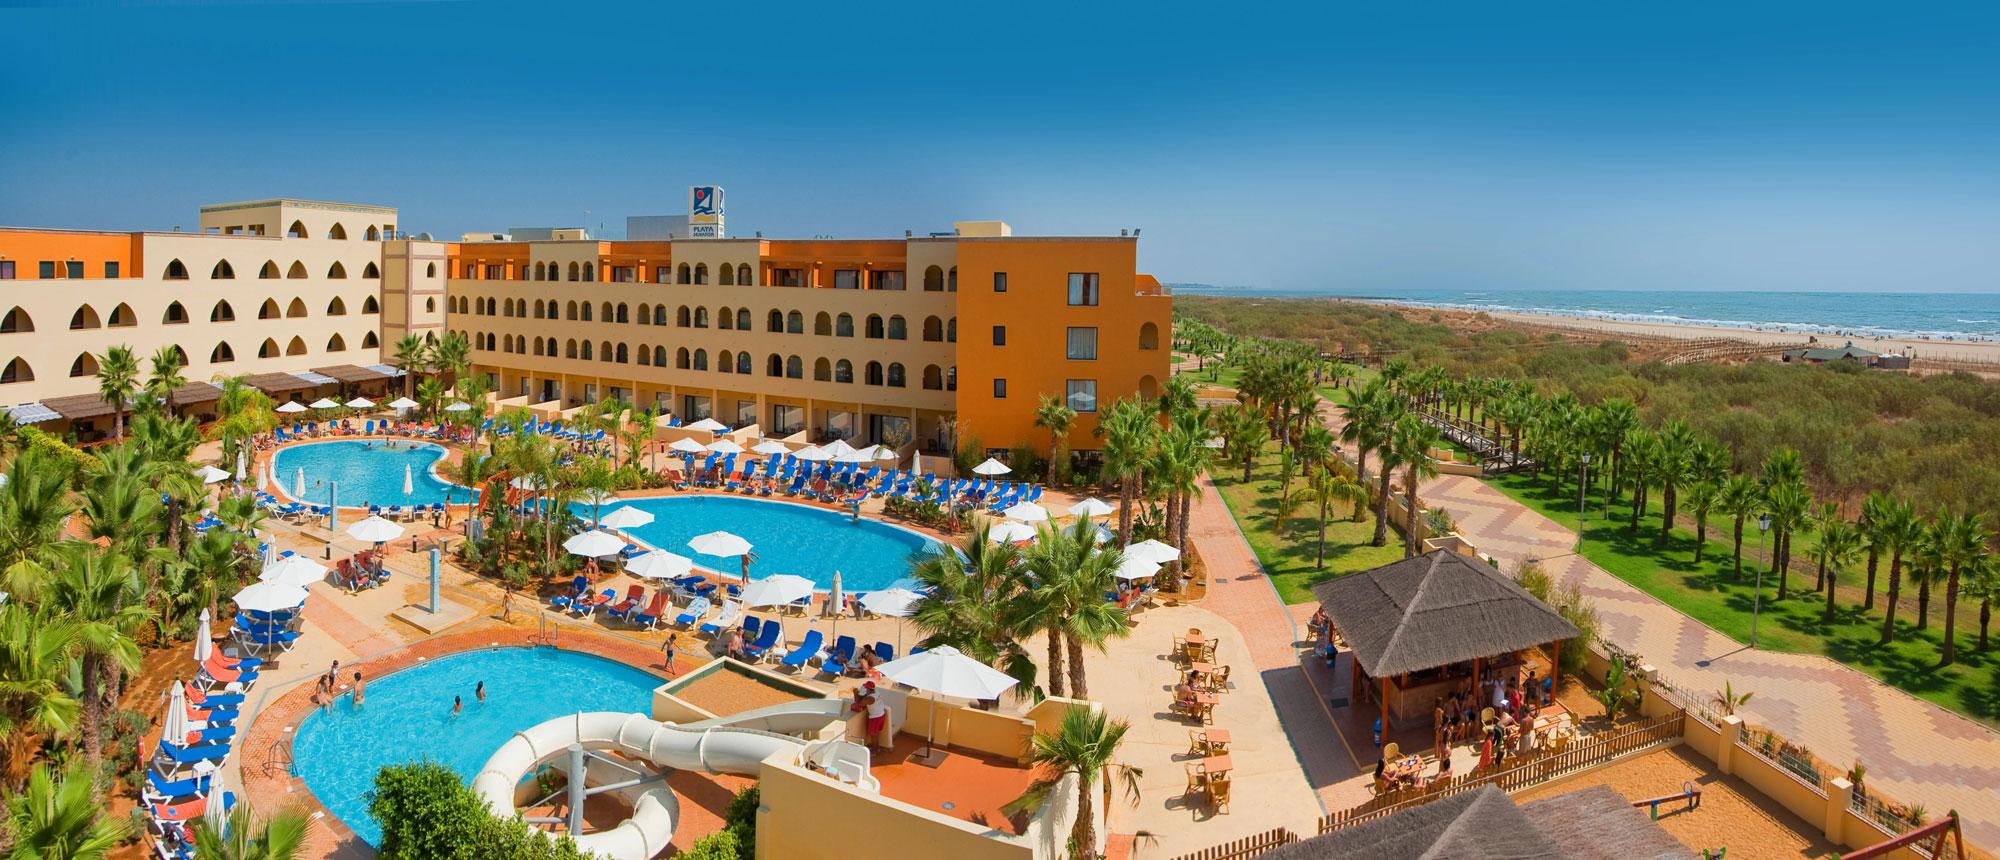 The Playa Marina Spa Hotel's beautiful hotel situated in faultless Costa de la Luz.